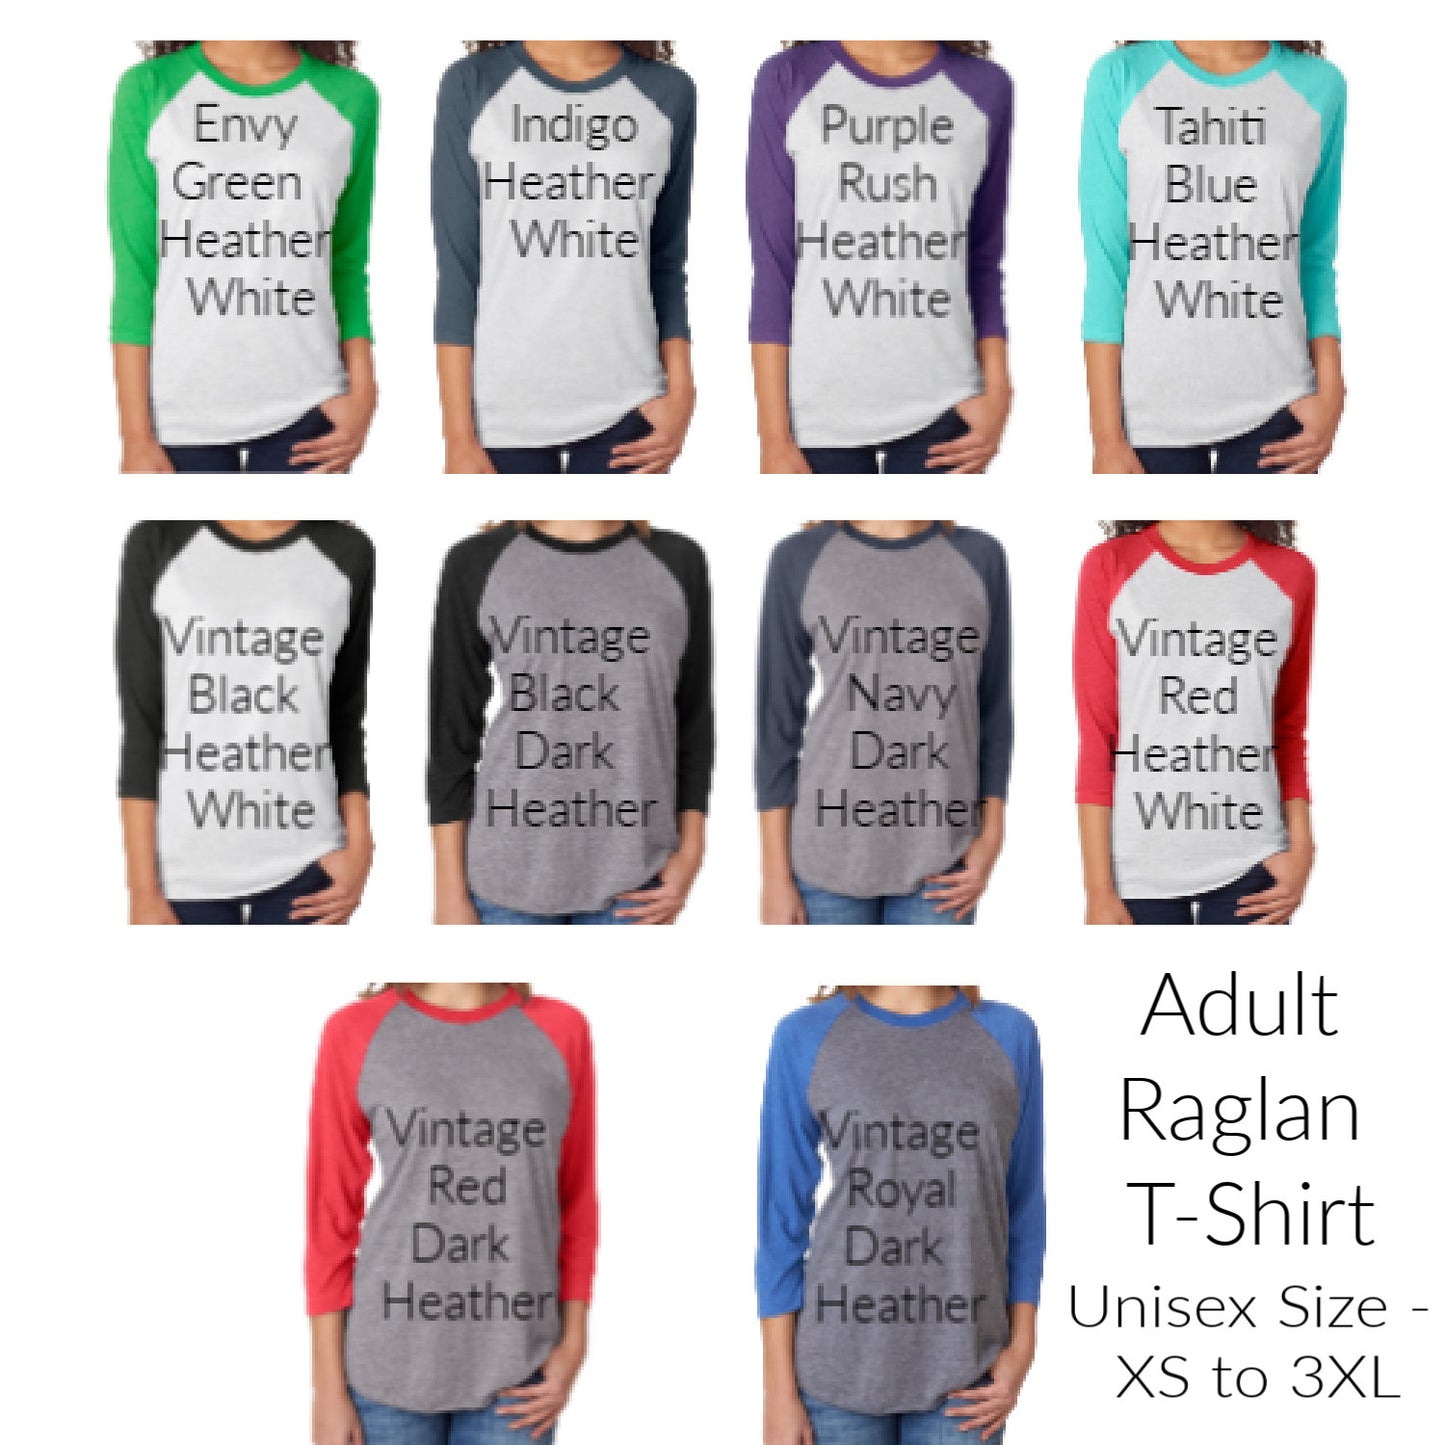 Customize your own T-Shirt - Unisex Adult Raglan Tee